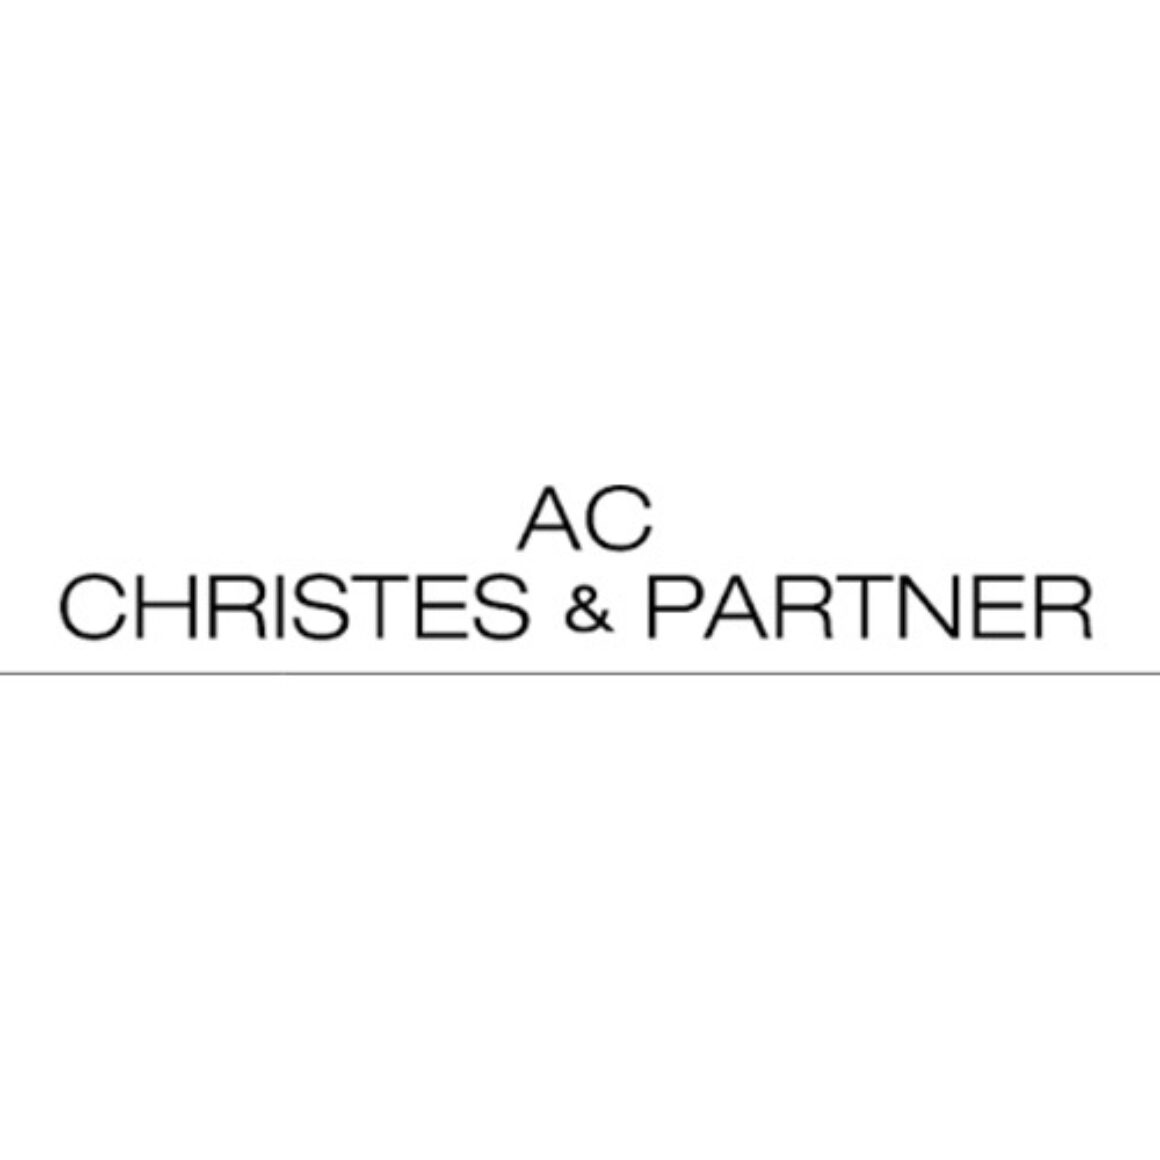 AC Christes & Partner